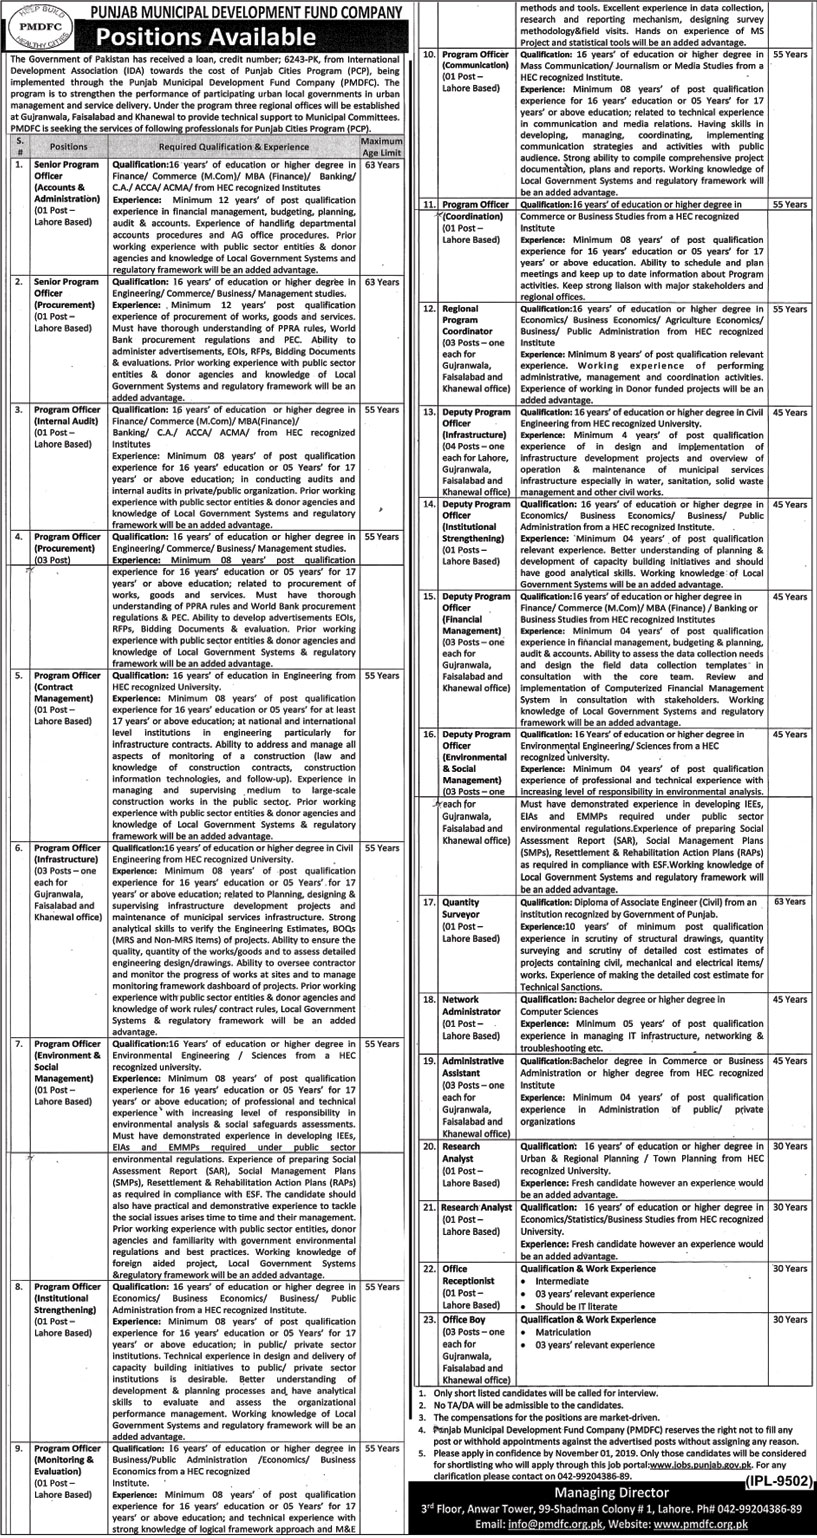 Jobs In Punjab Municipal Development Fund Company 18 October 2019